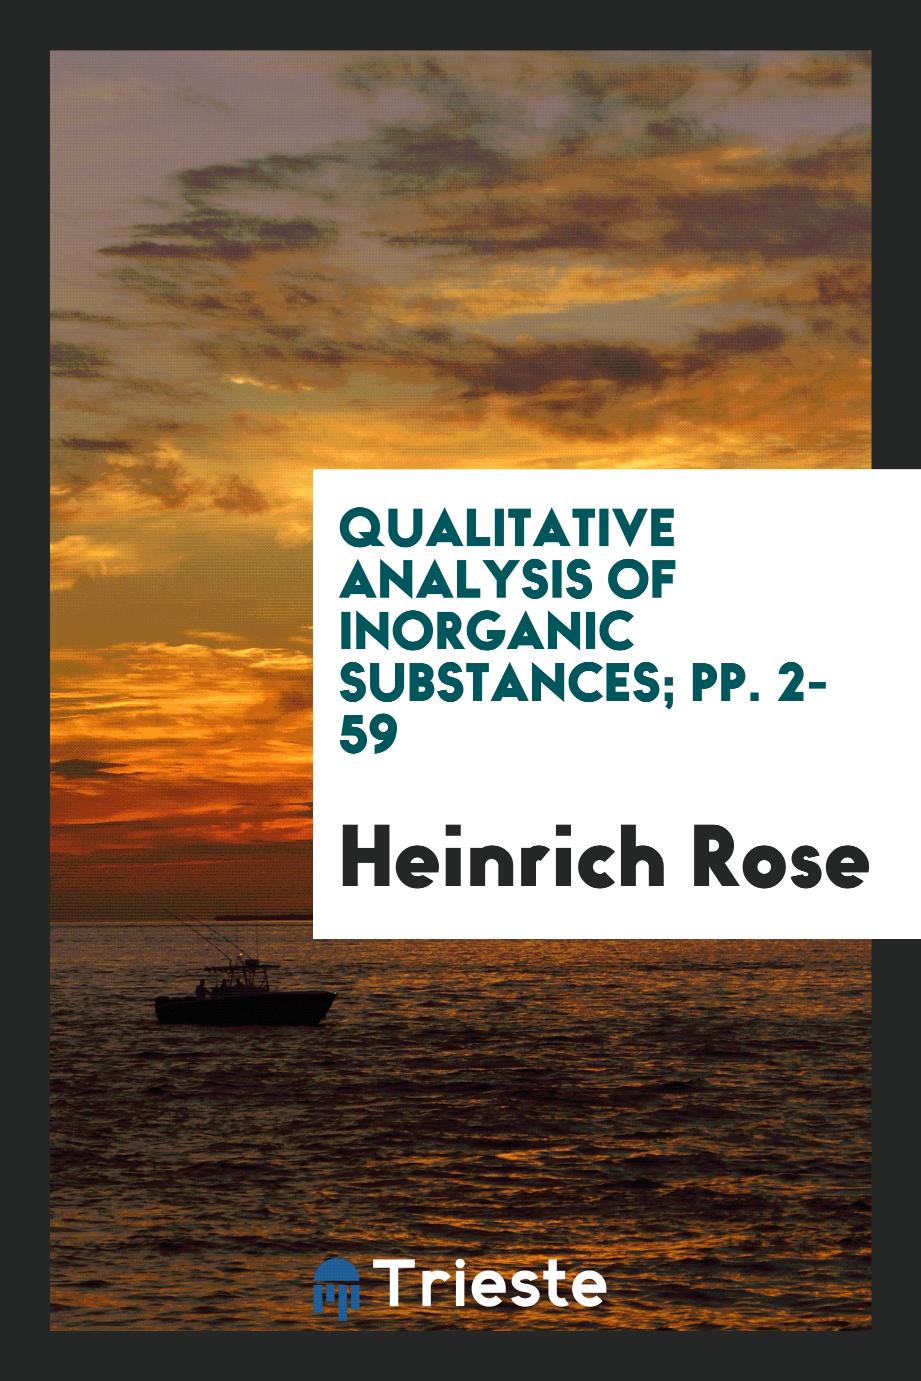 Qualitative analysis of inorganic substances; pp. 2-59